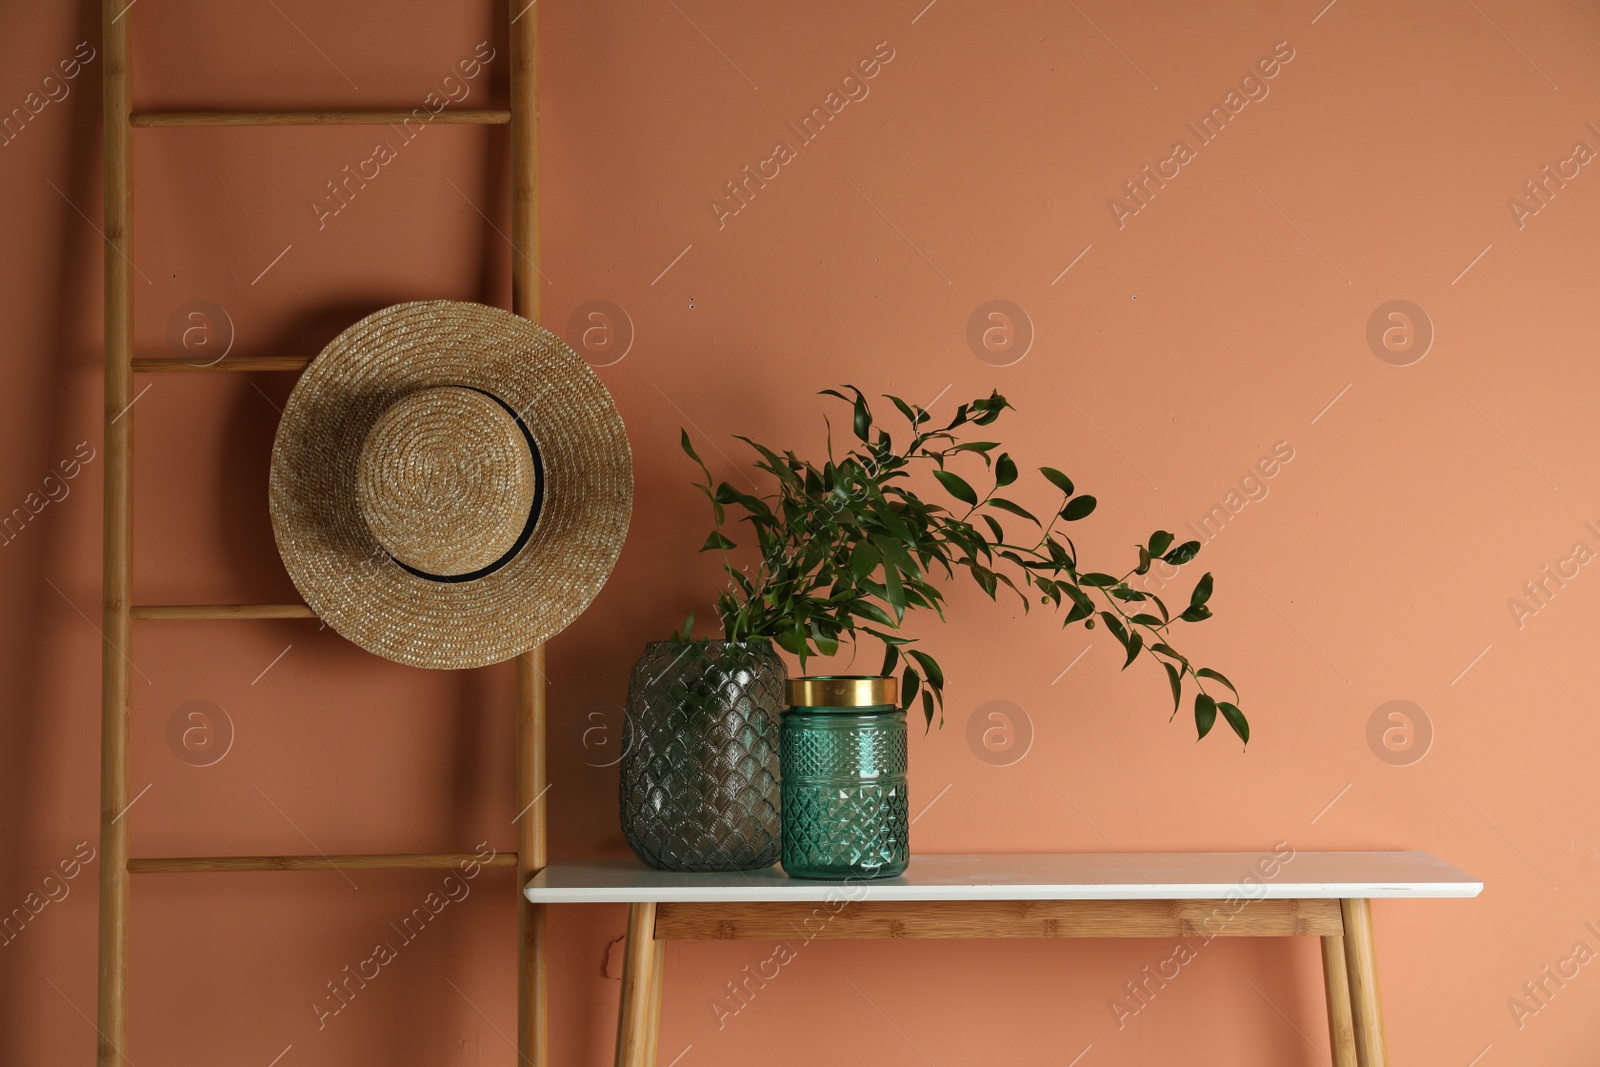 Photo of Stylish decorative vases on table near wall